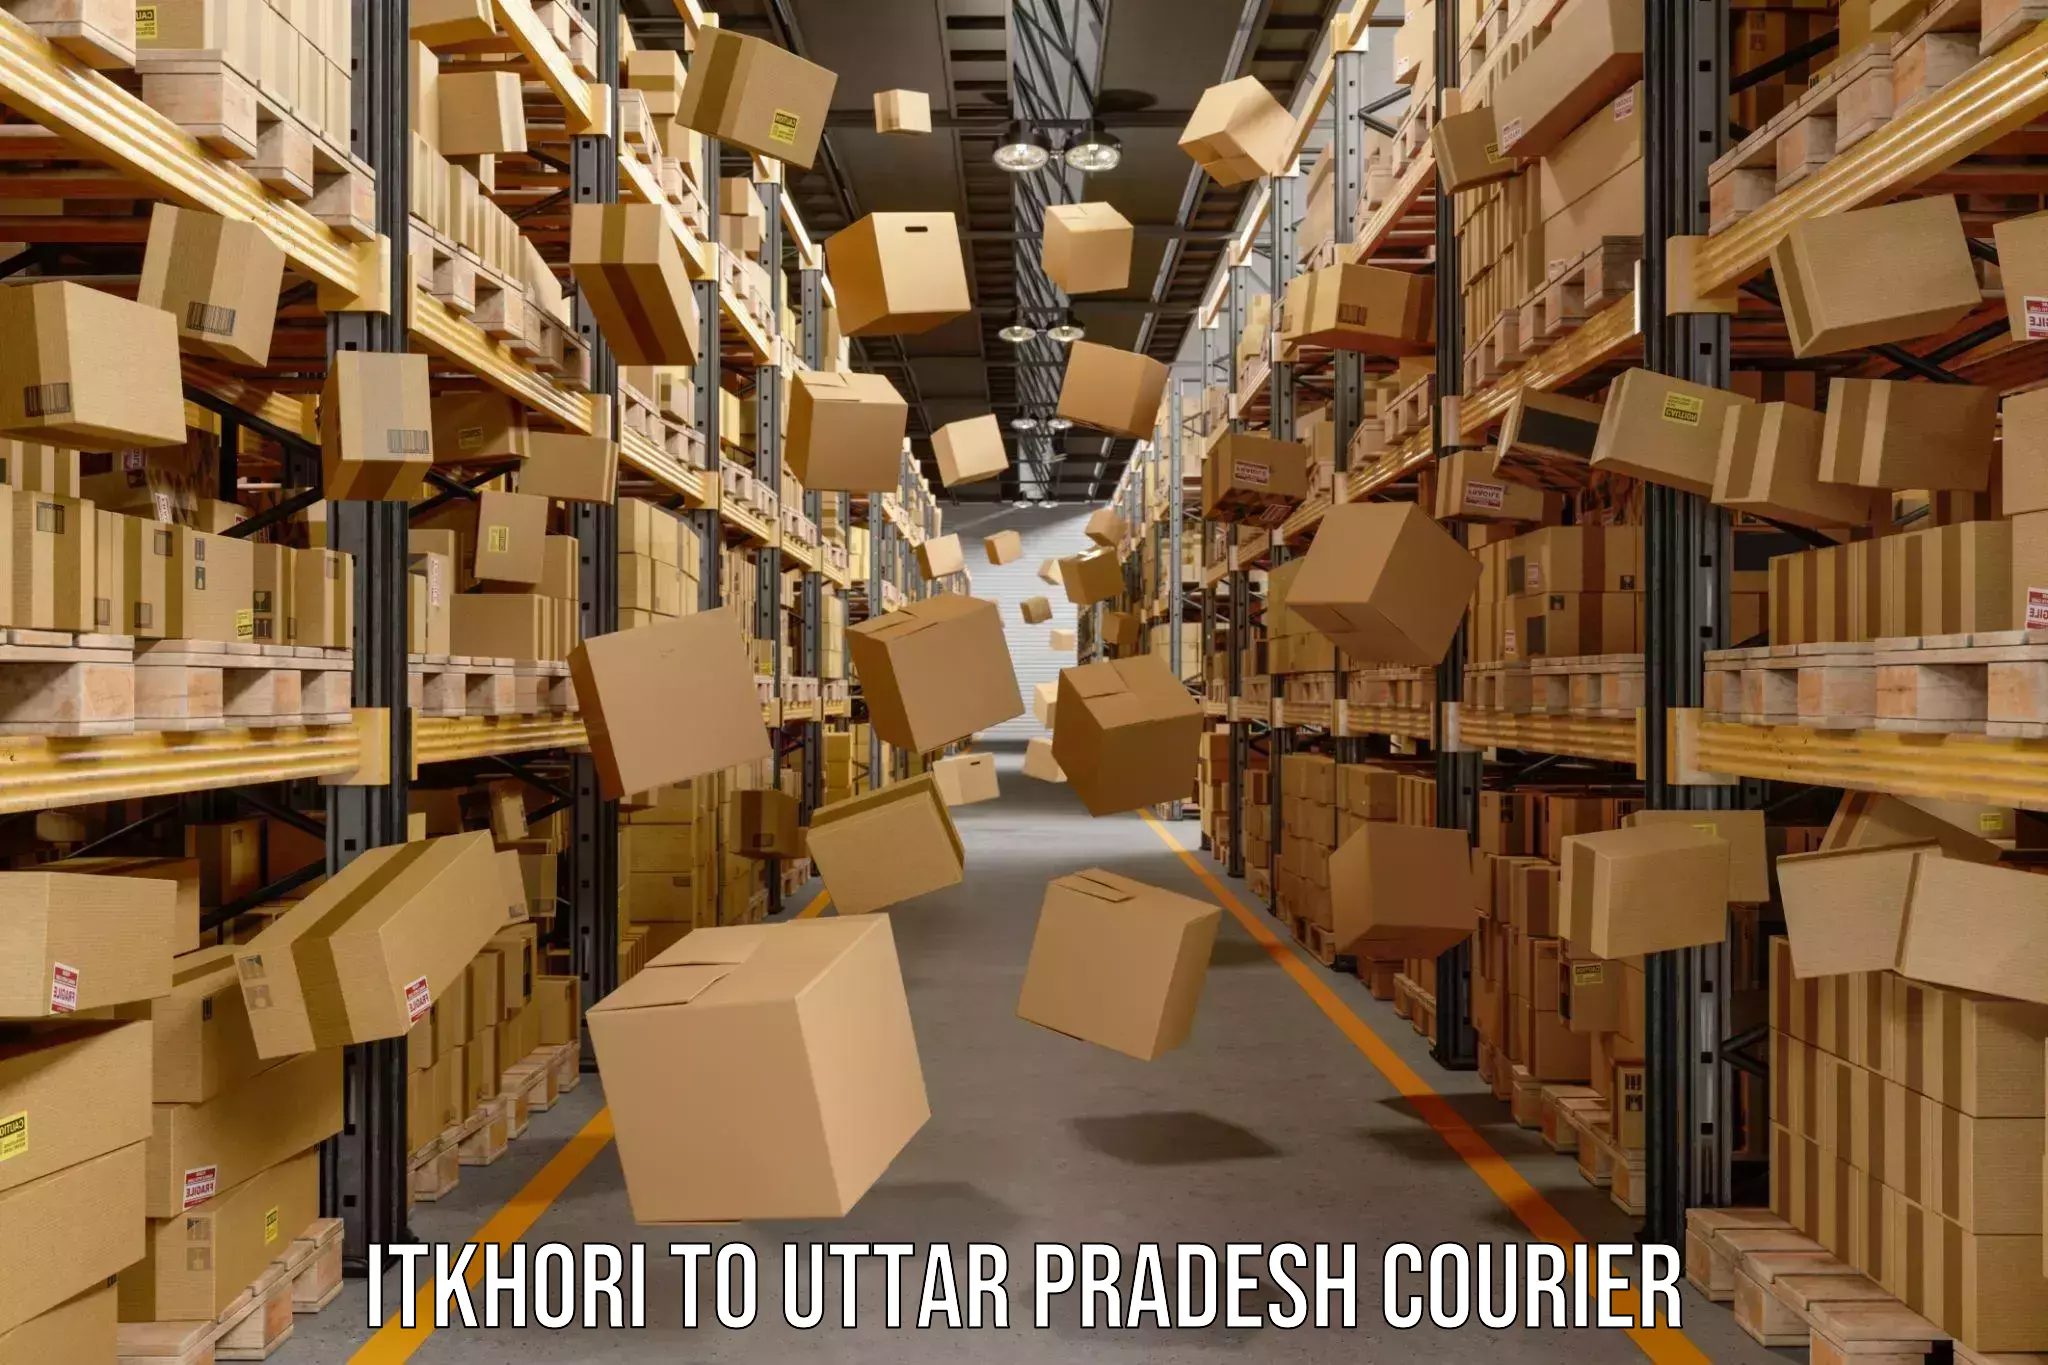 Local delivery service Itkhori to Uttar Pradesh